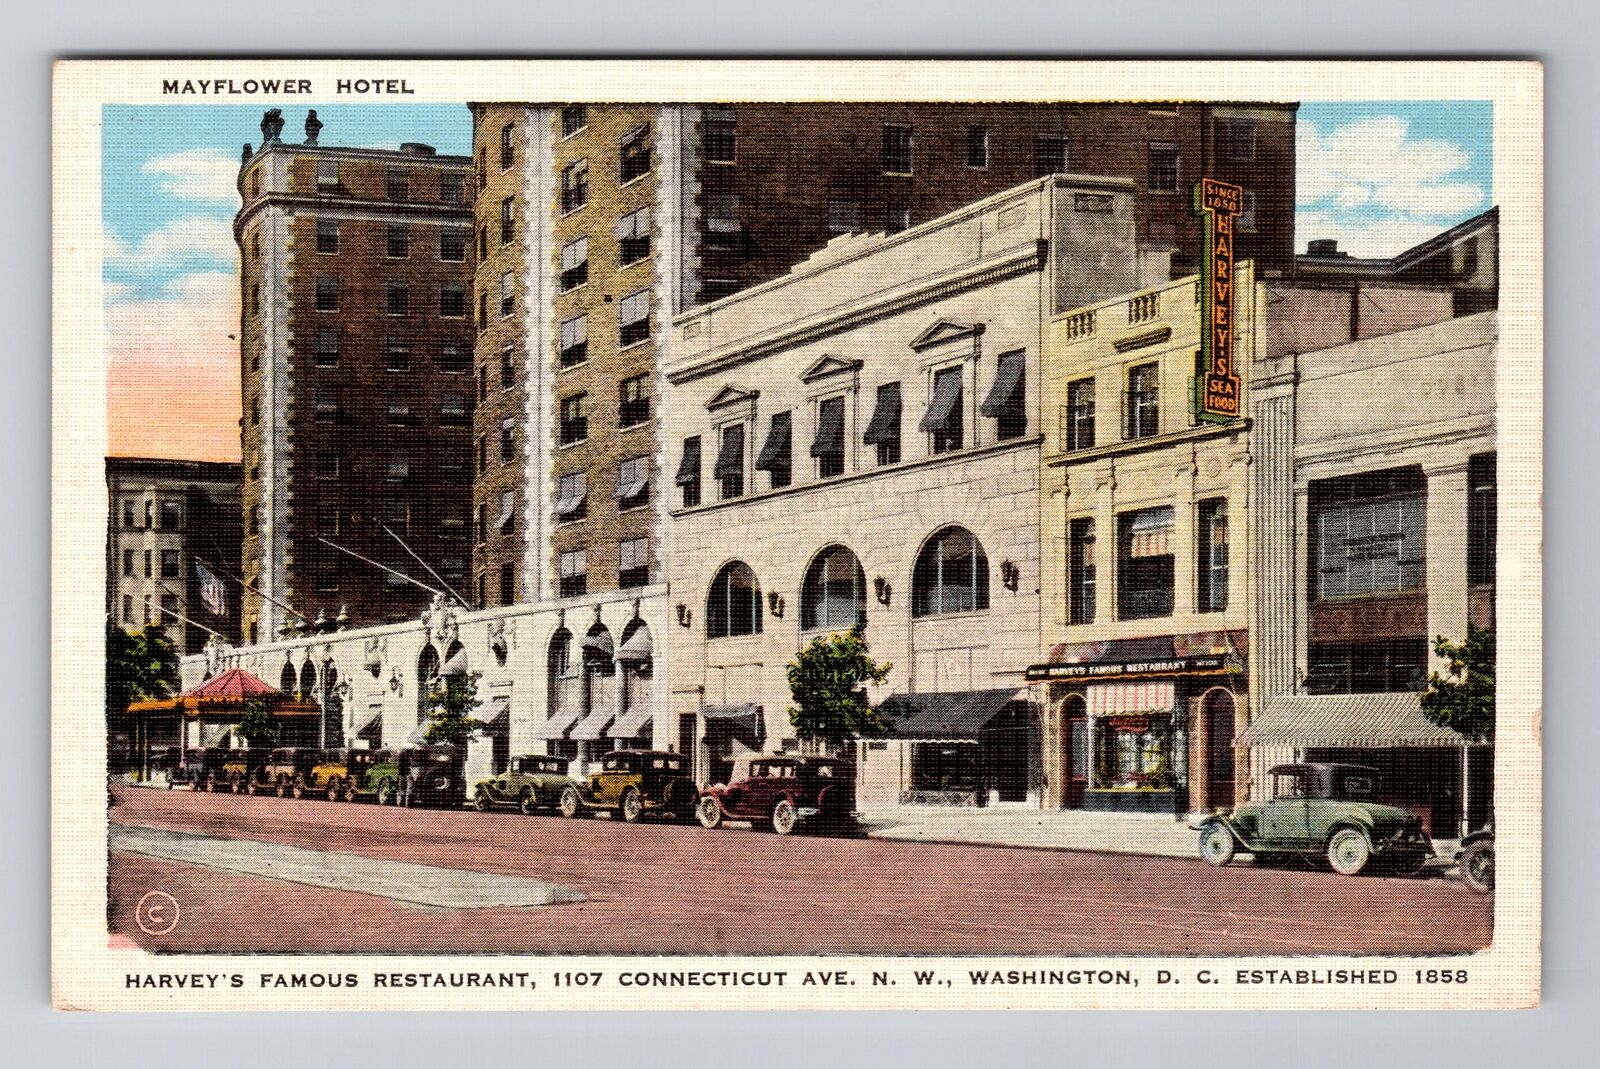 Washington DC, Mayflower Hotel, Harveys Restaurant, Advertising Vintage Postcard